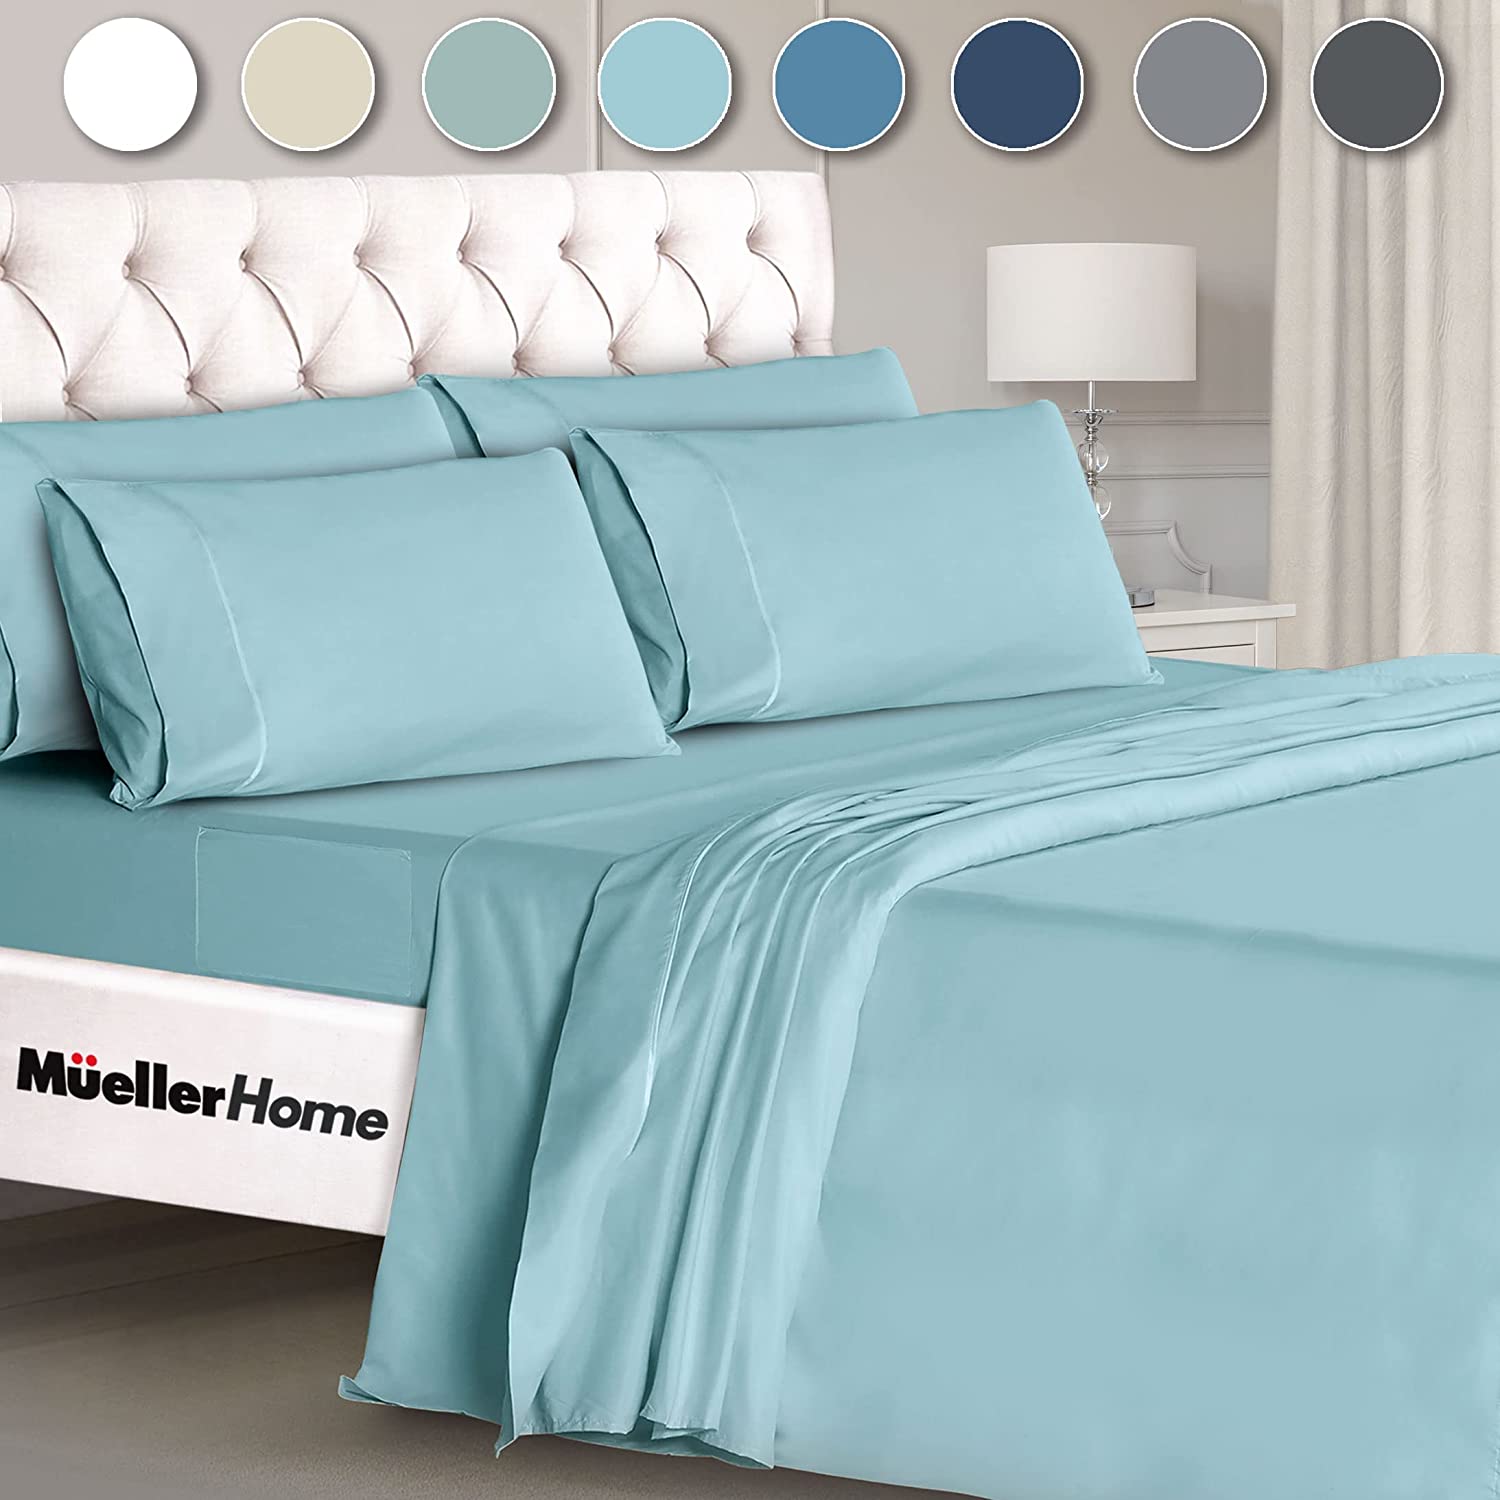 muellerhome_premium-hotel-collection-6-piece-full-size-sheet-set-light-teal